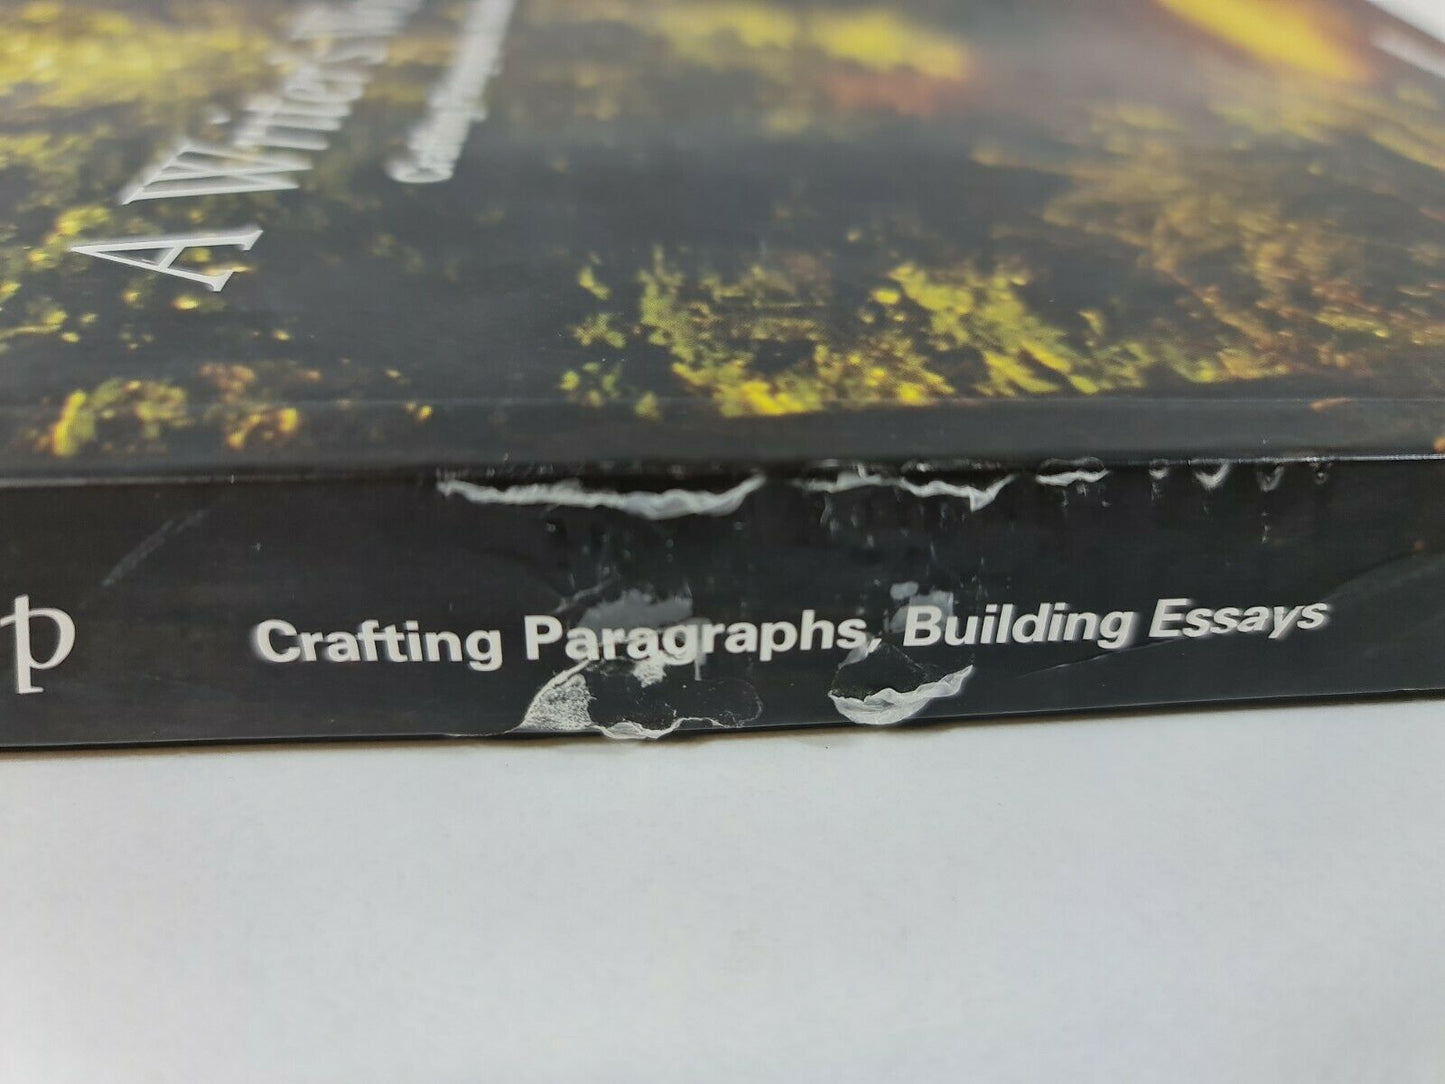 A Writer's Workshop: Crafting Paragraphs, Building Essays by Bob Brannan